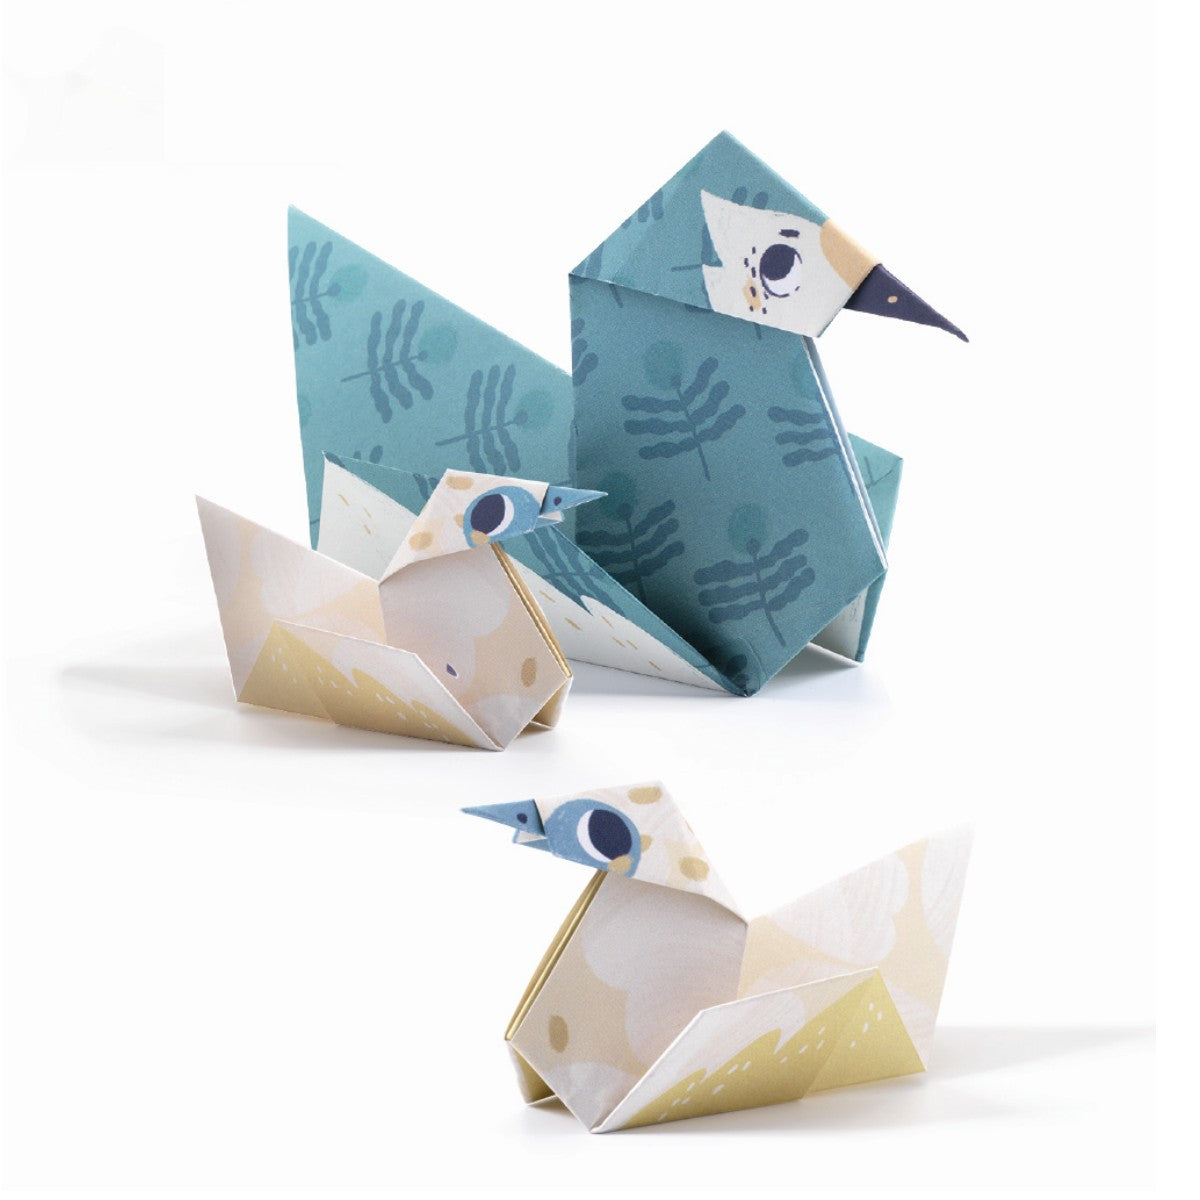 Djeco kreativ pakke, origami familier